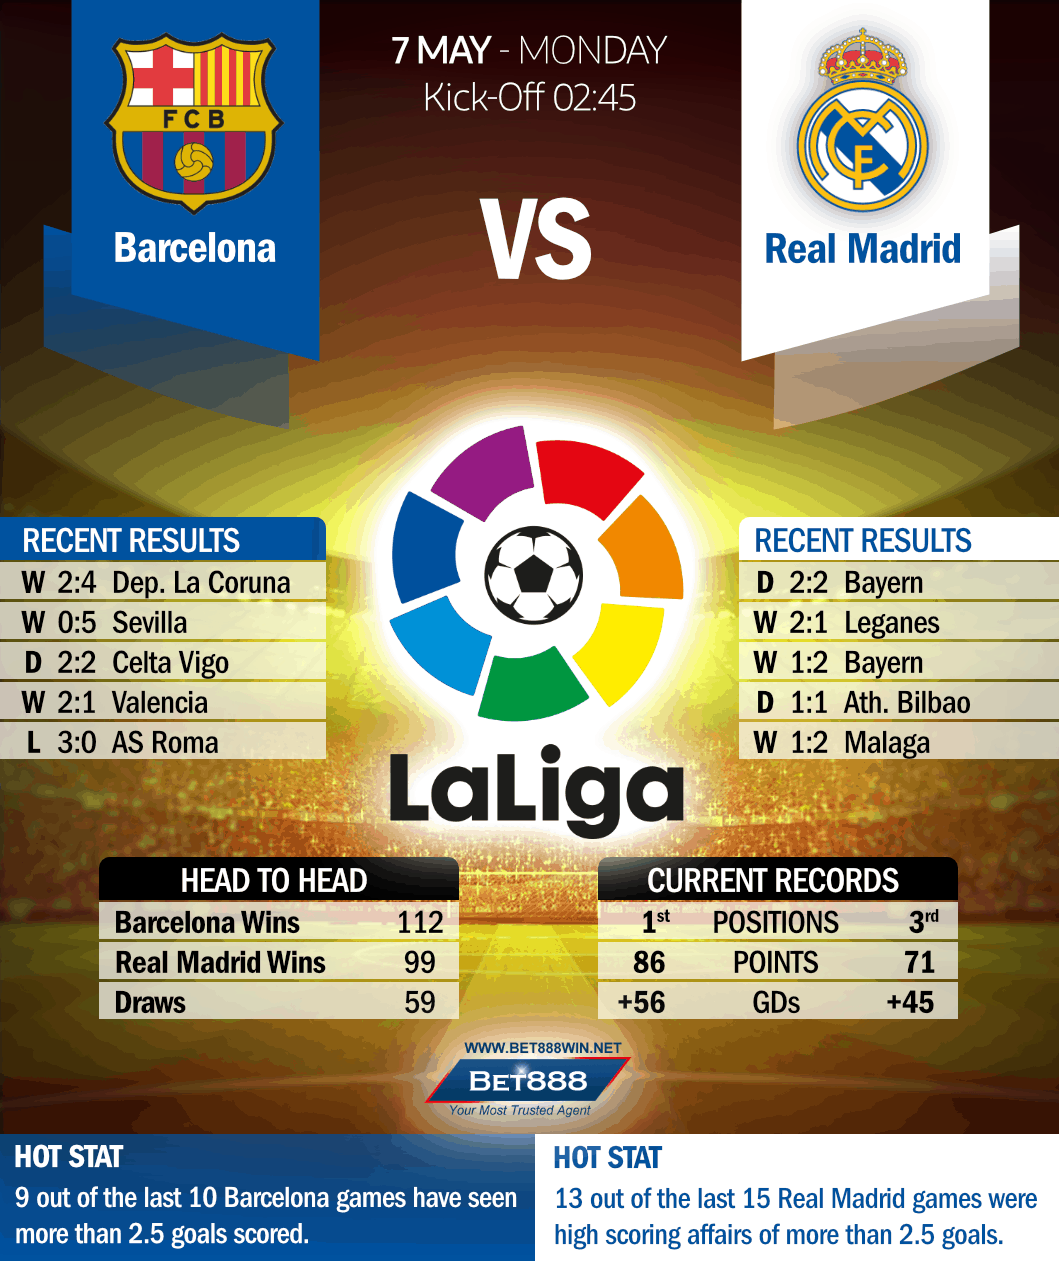 Barcelona vs Real Madrid 07/05/18